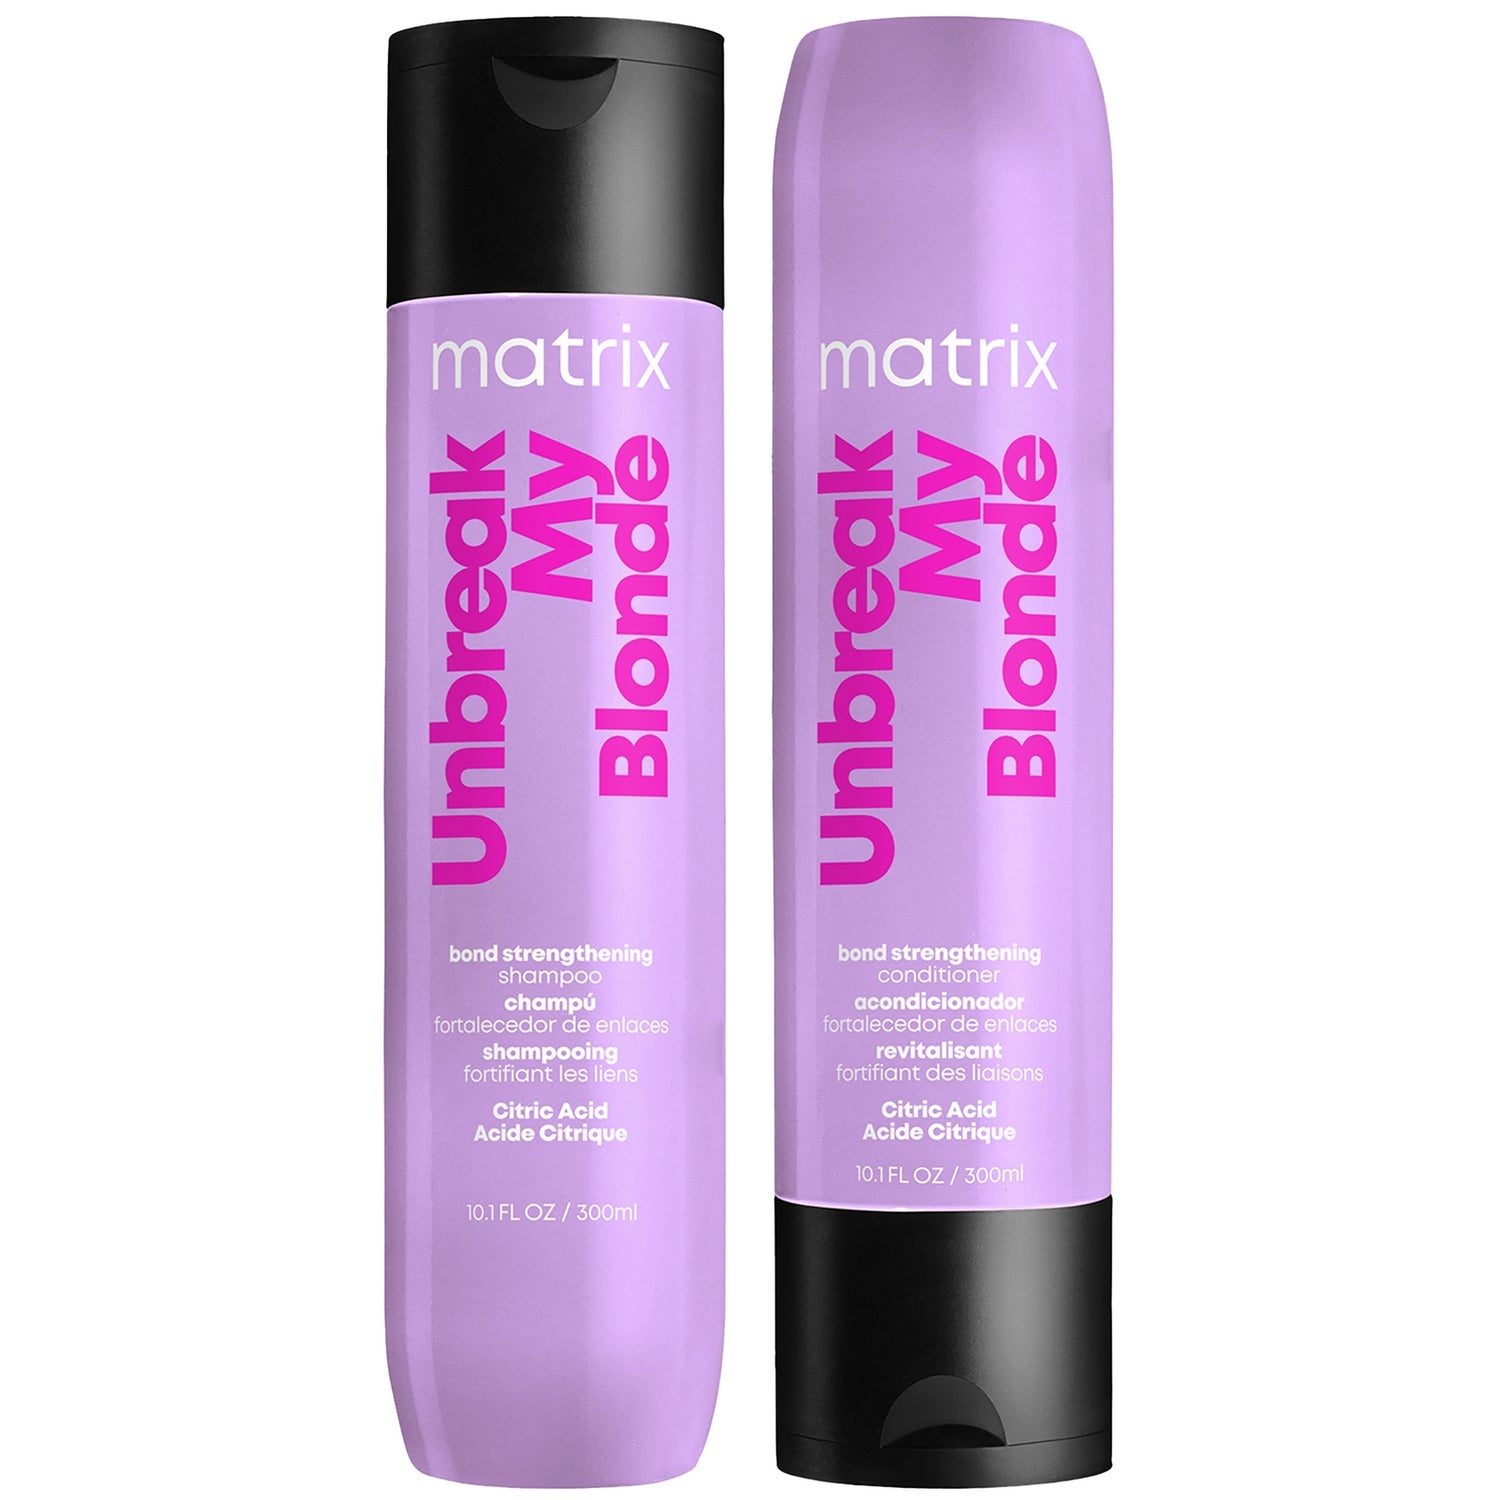 Matrix Total Results Unbreak My Blonde Shampoo and Conditioner 300ml